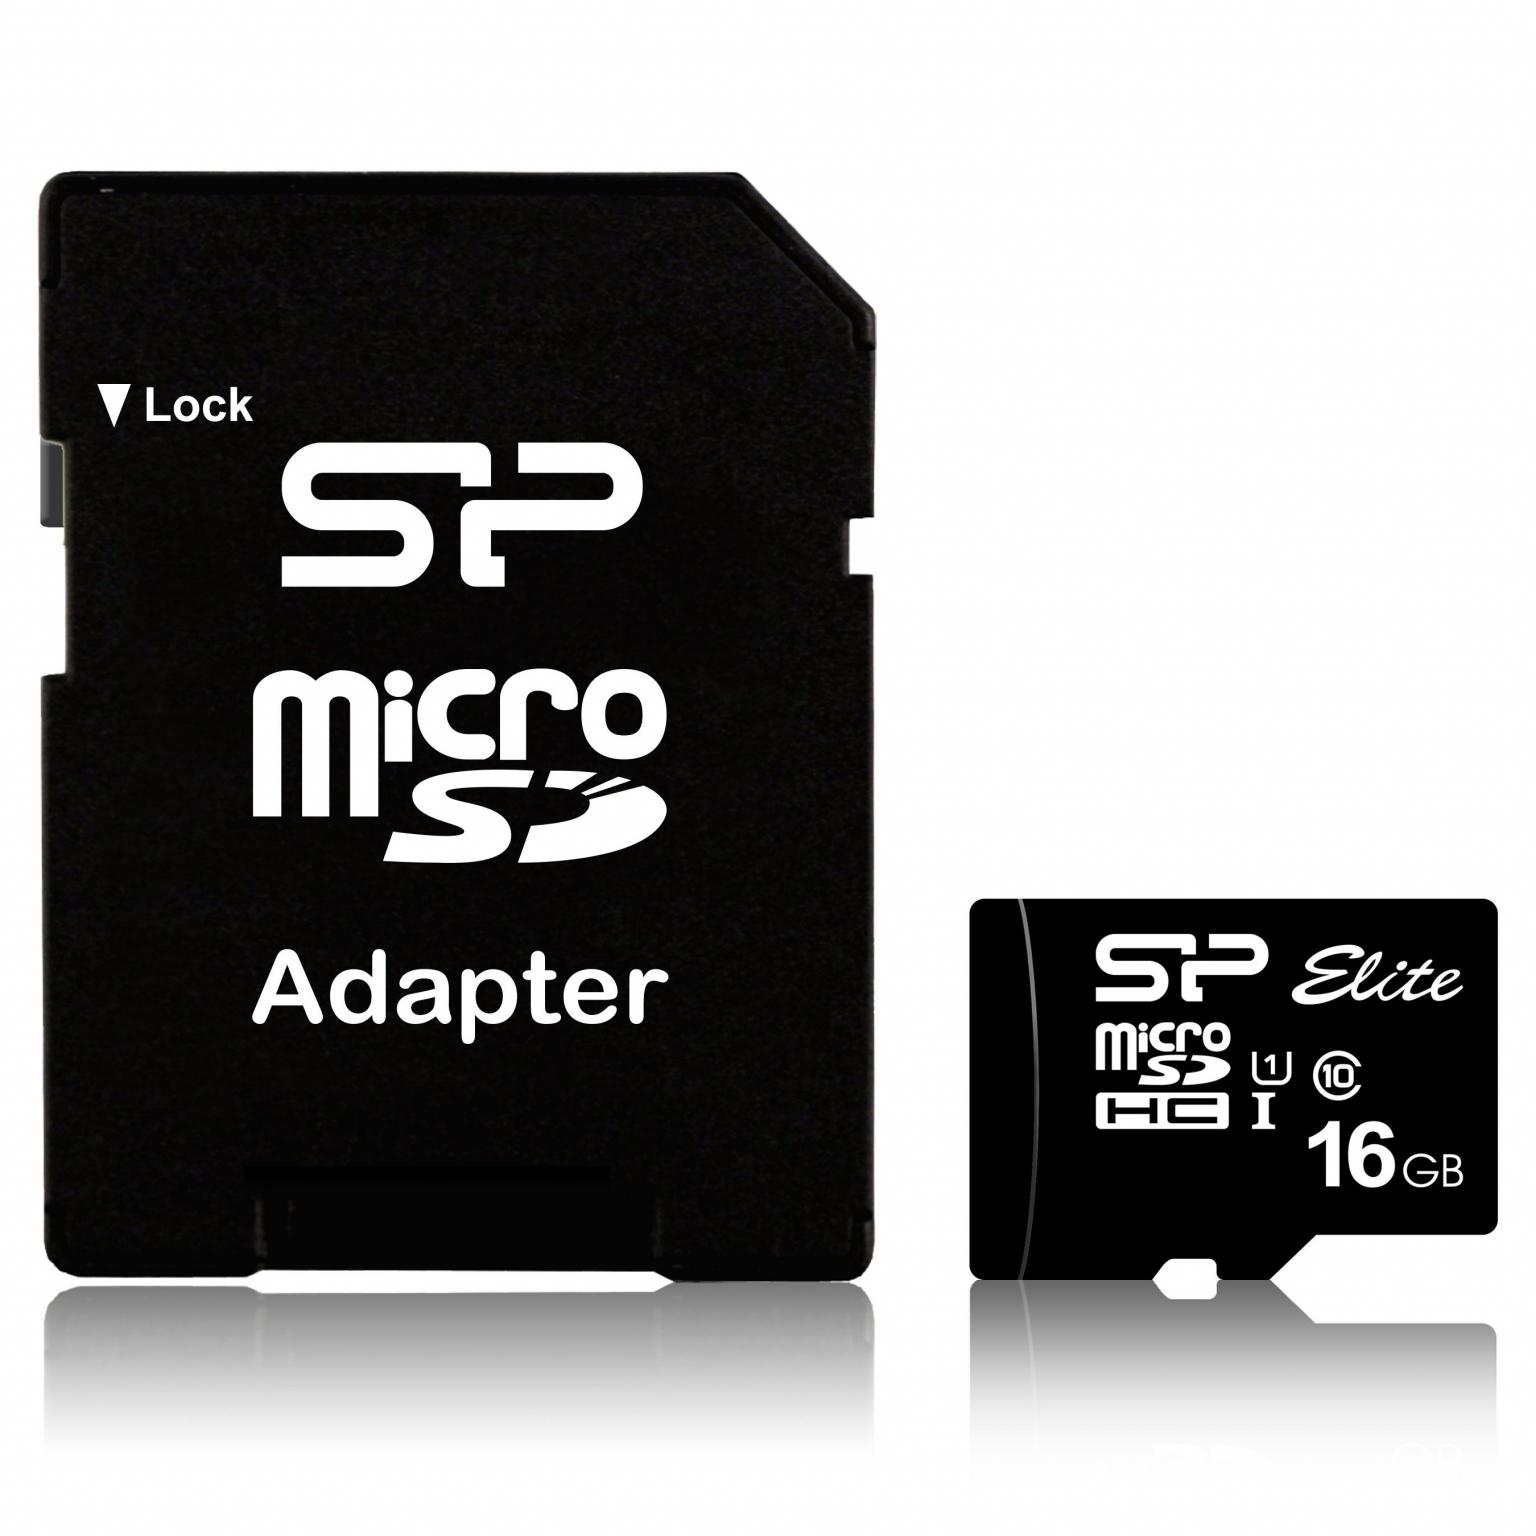 HTC Micro SDHC Speicherkarte 16 GB - Silicon Power